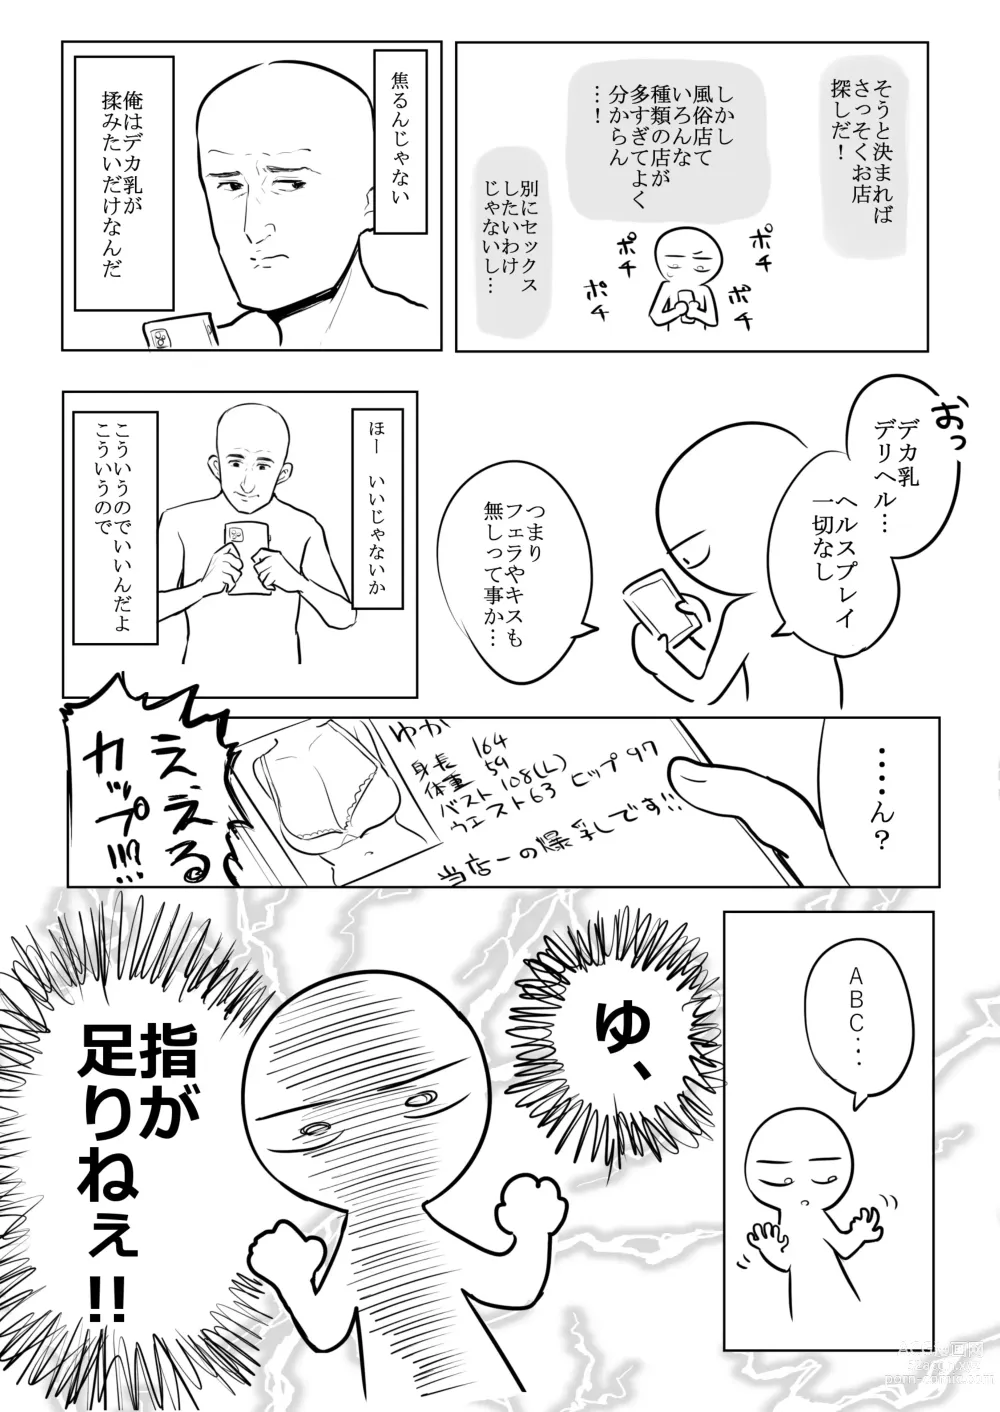 Page 5 of doujinshi Huge Breast Massage Report Manga